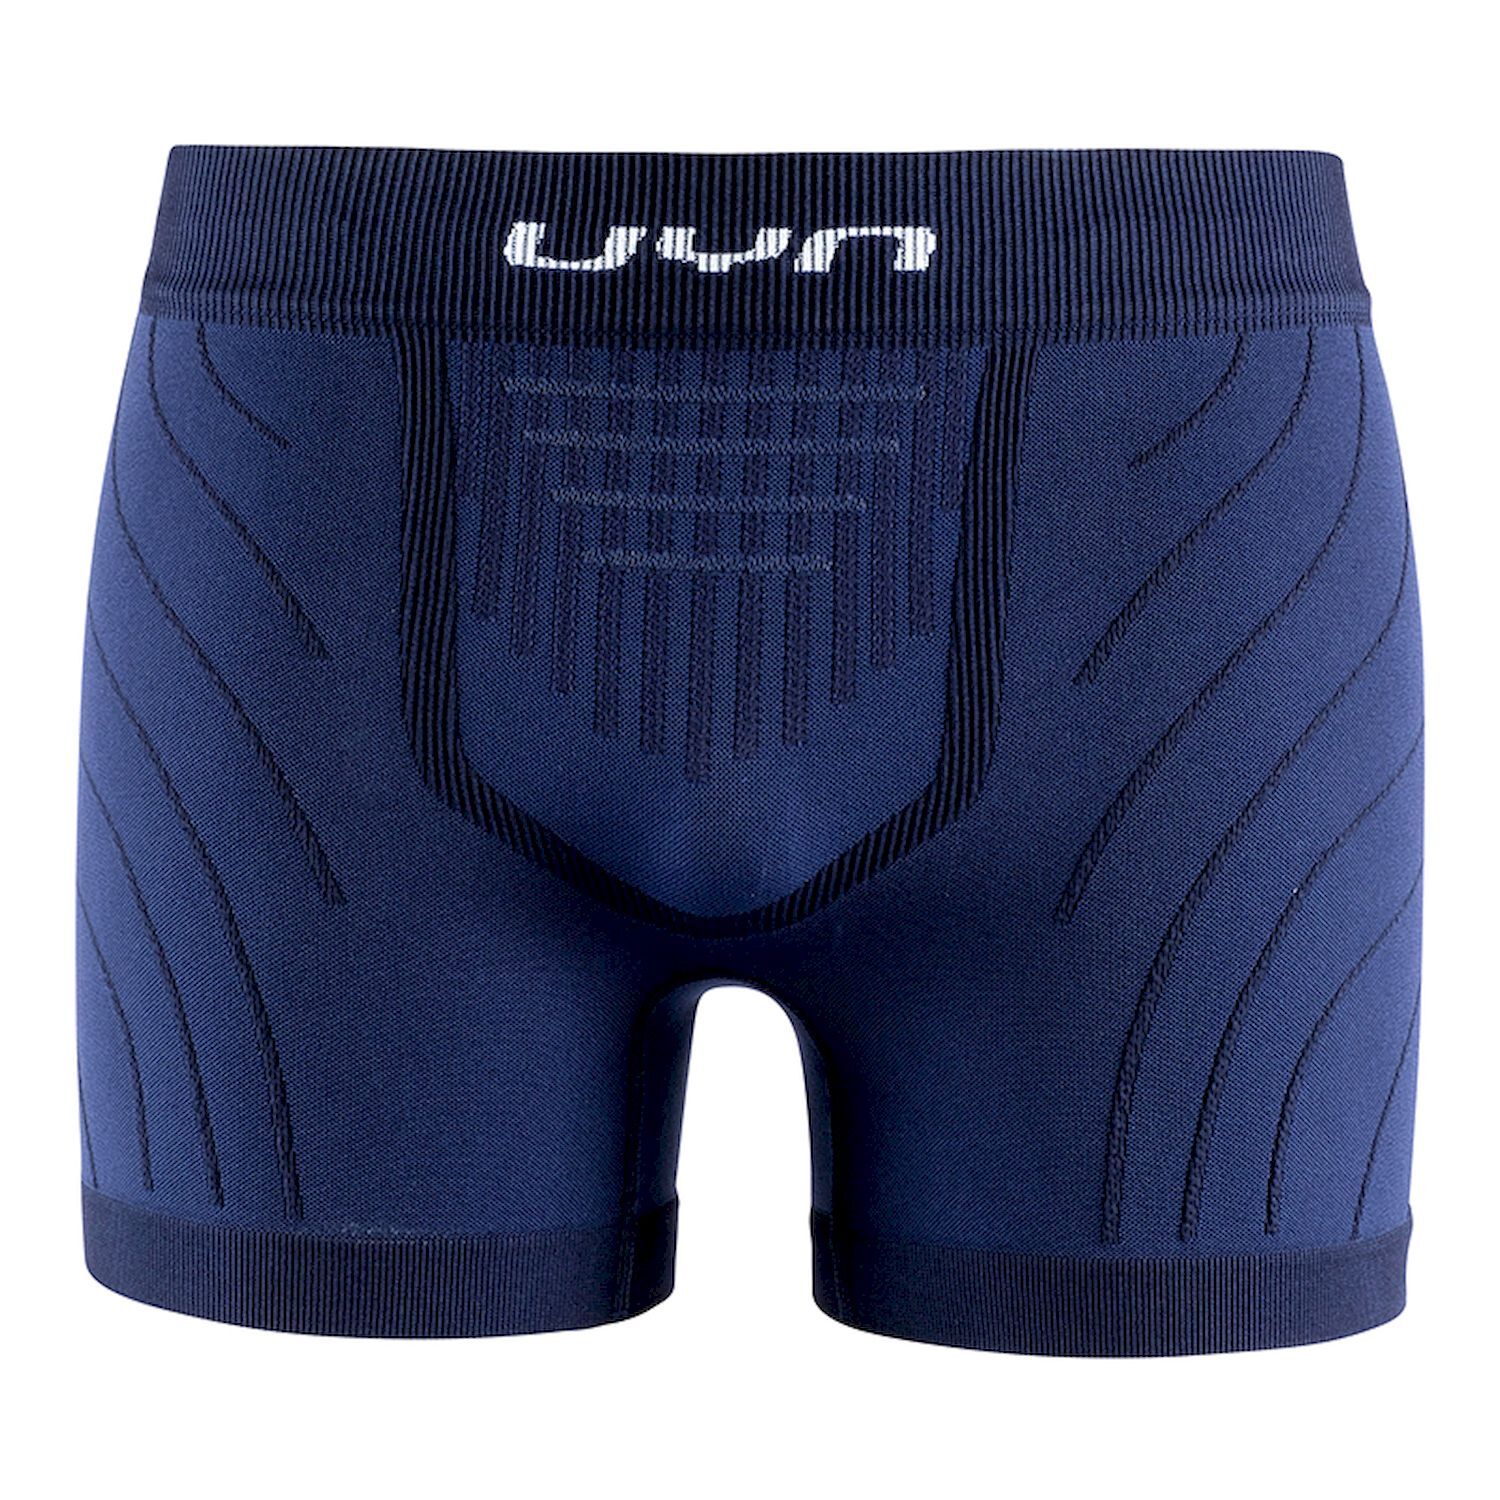 Uyn Motyon 2.0 - Underwear - Men's